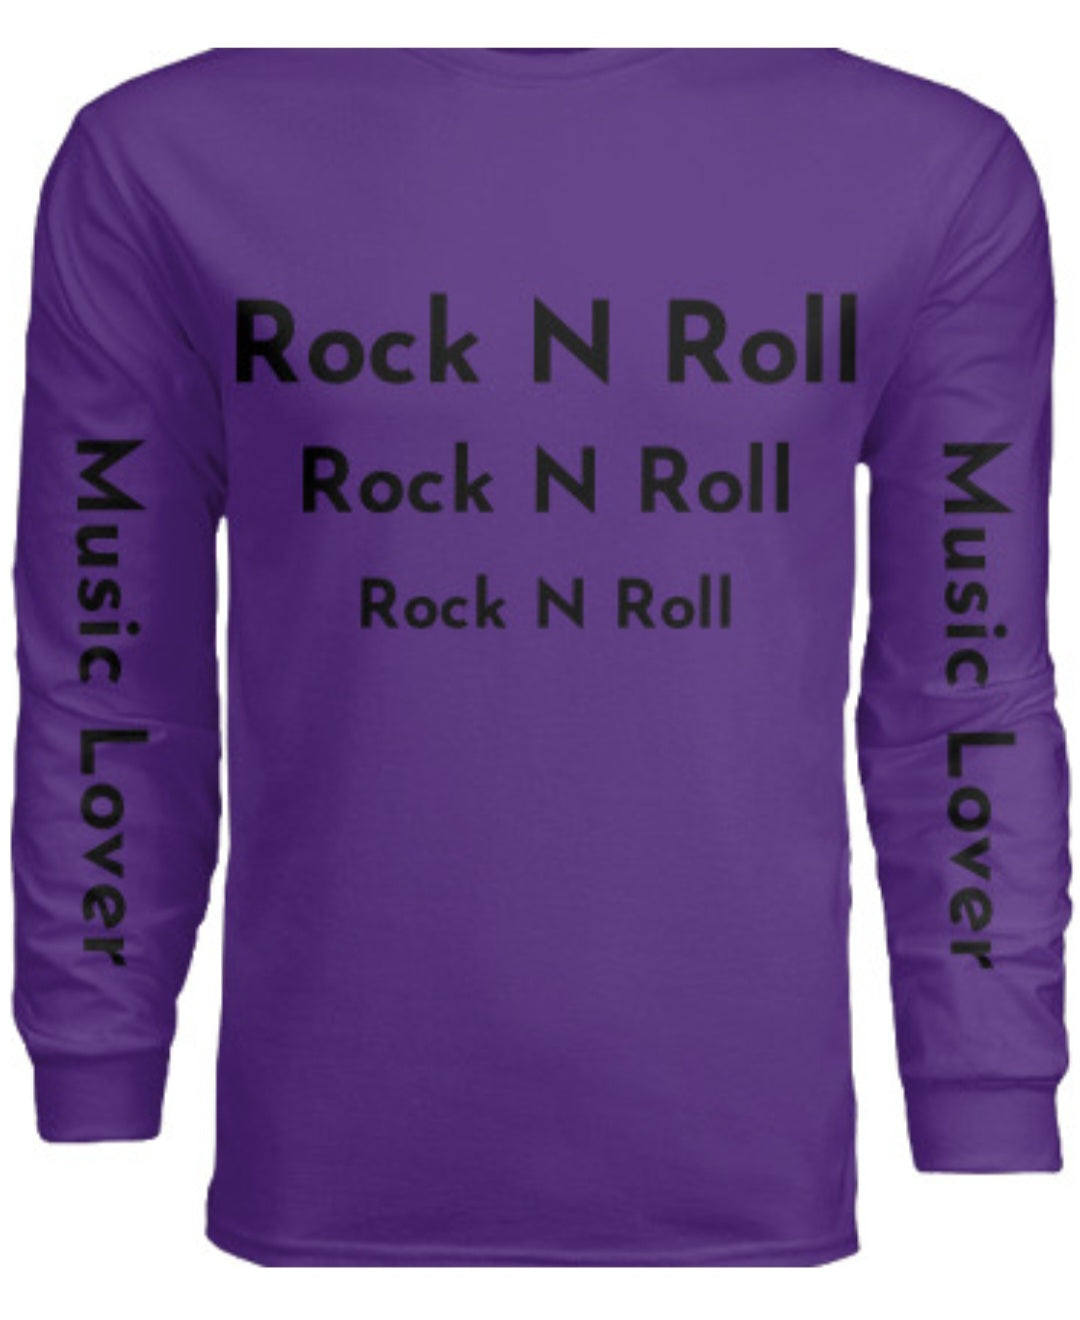 Long Sleeve Sweatshirt (Rock N Roll)